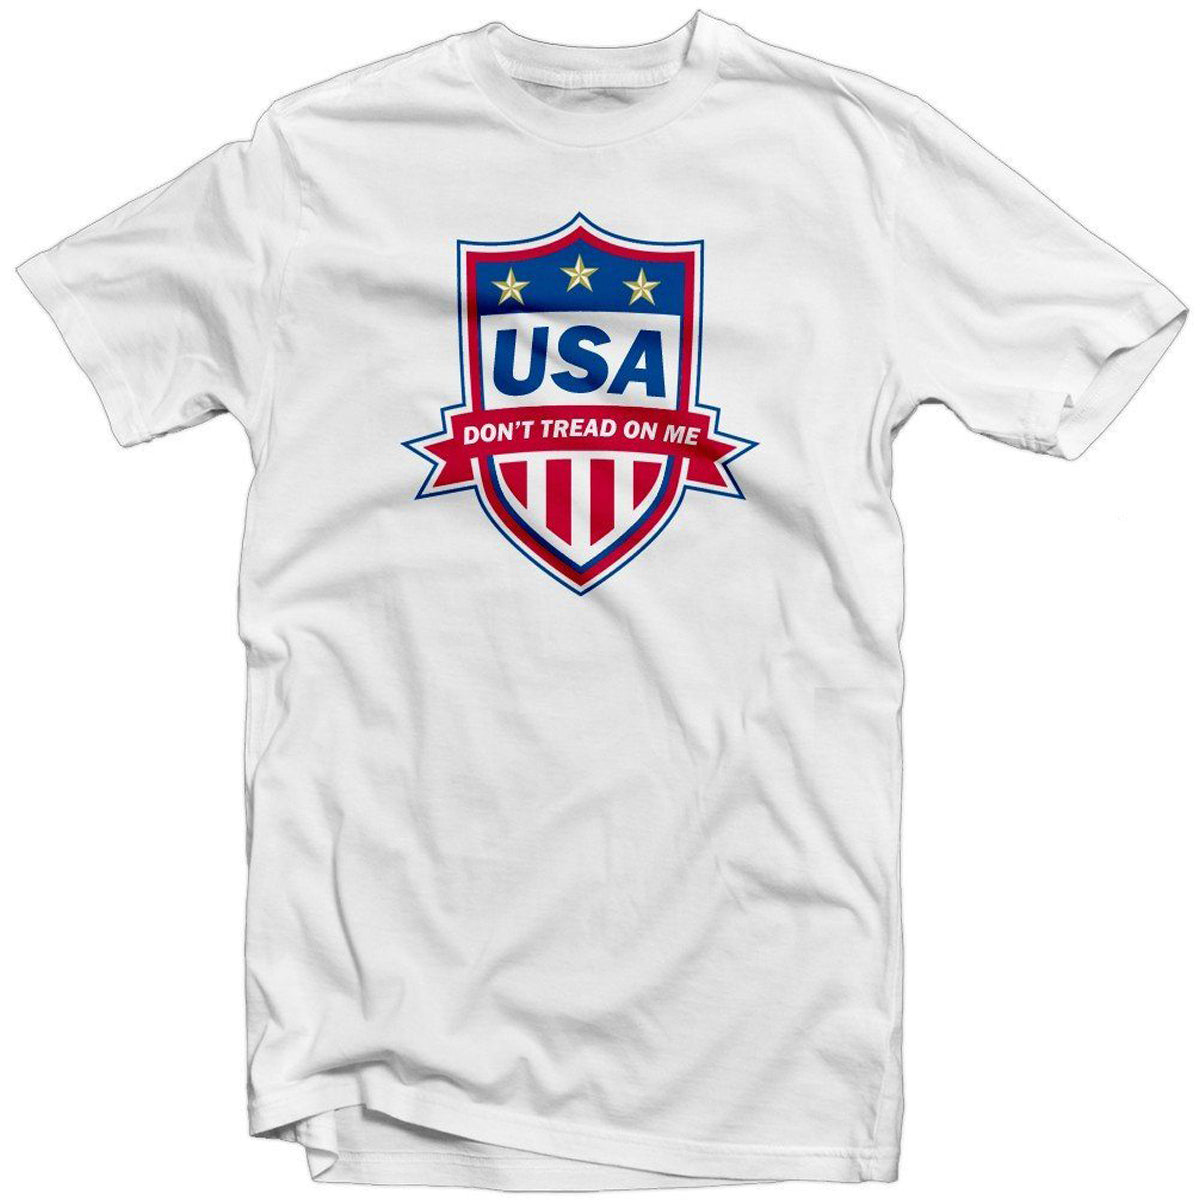 USA Don't Tread on Me Legend Tee: Mia Hamm Printed Tee T-shirts 411 